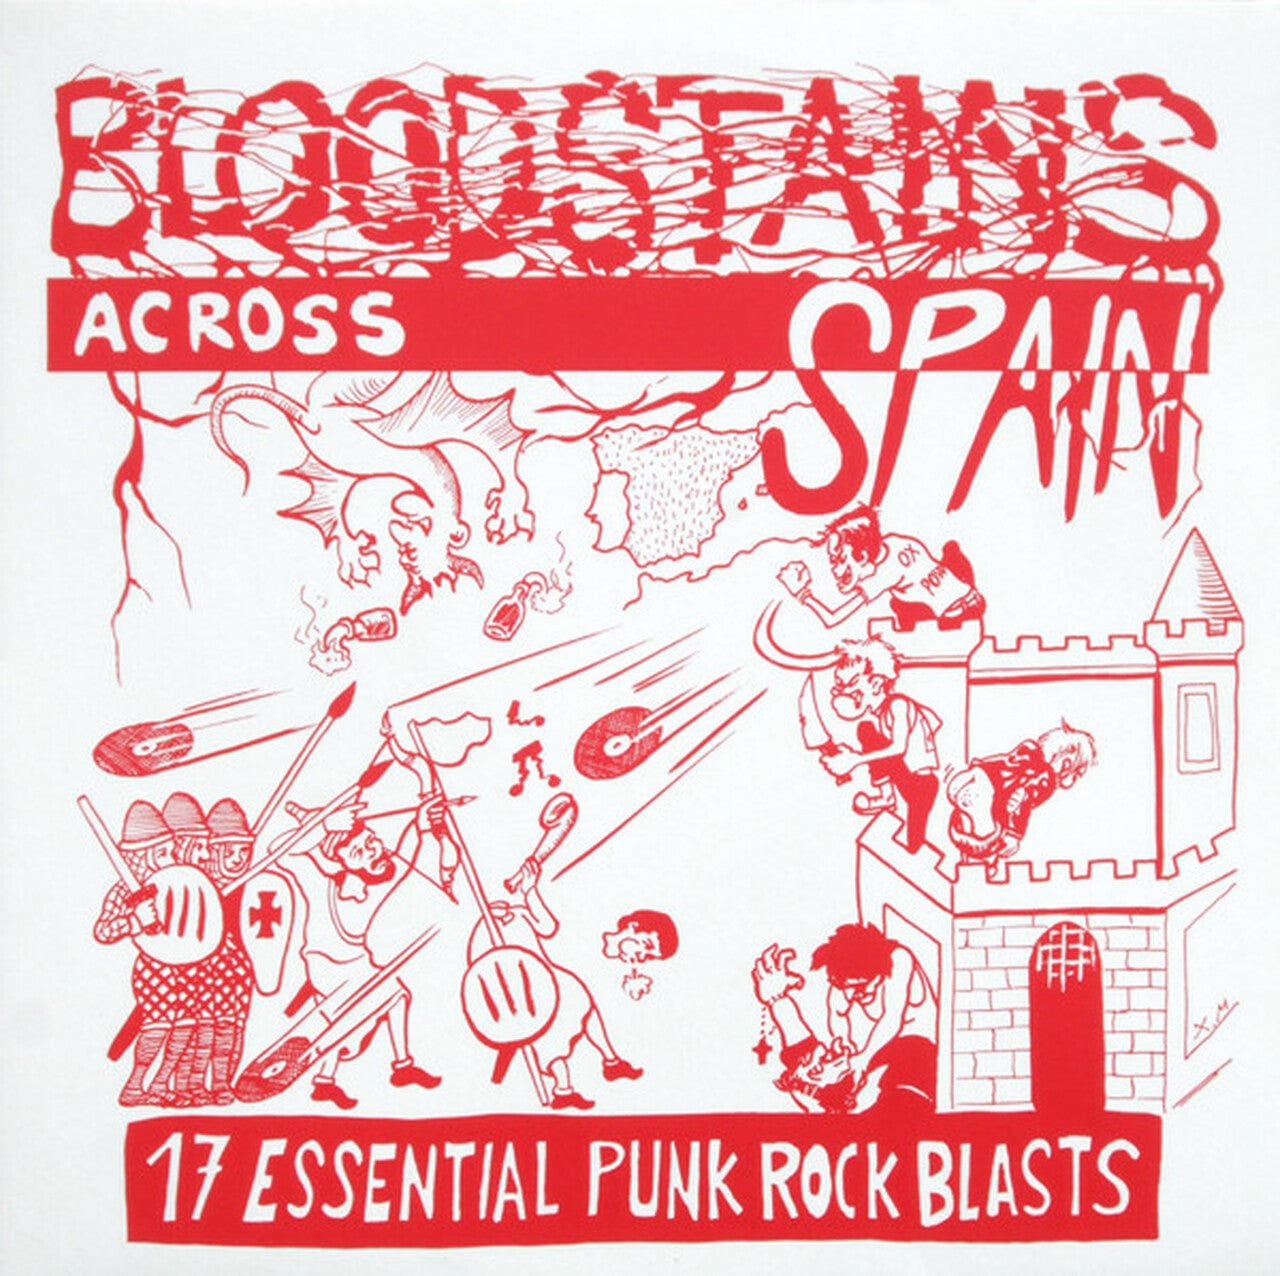 V/A "Bloodstains Across Spain" LP